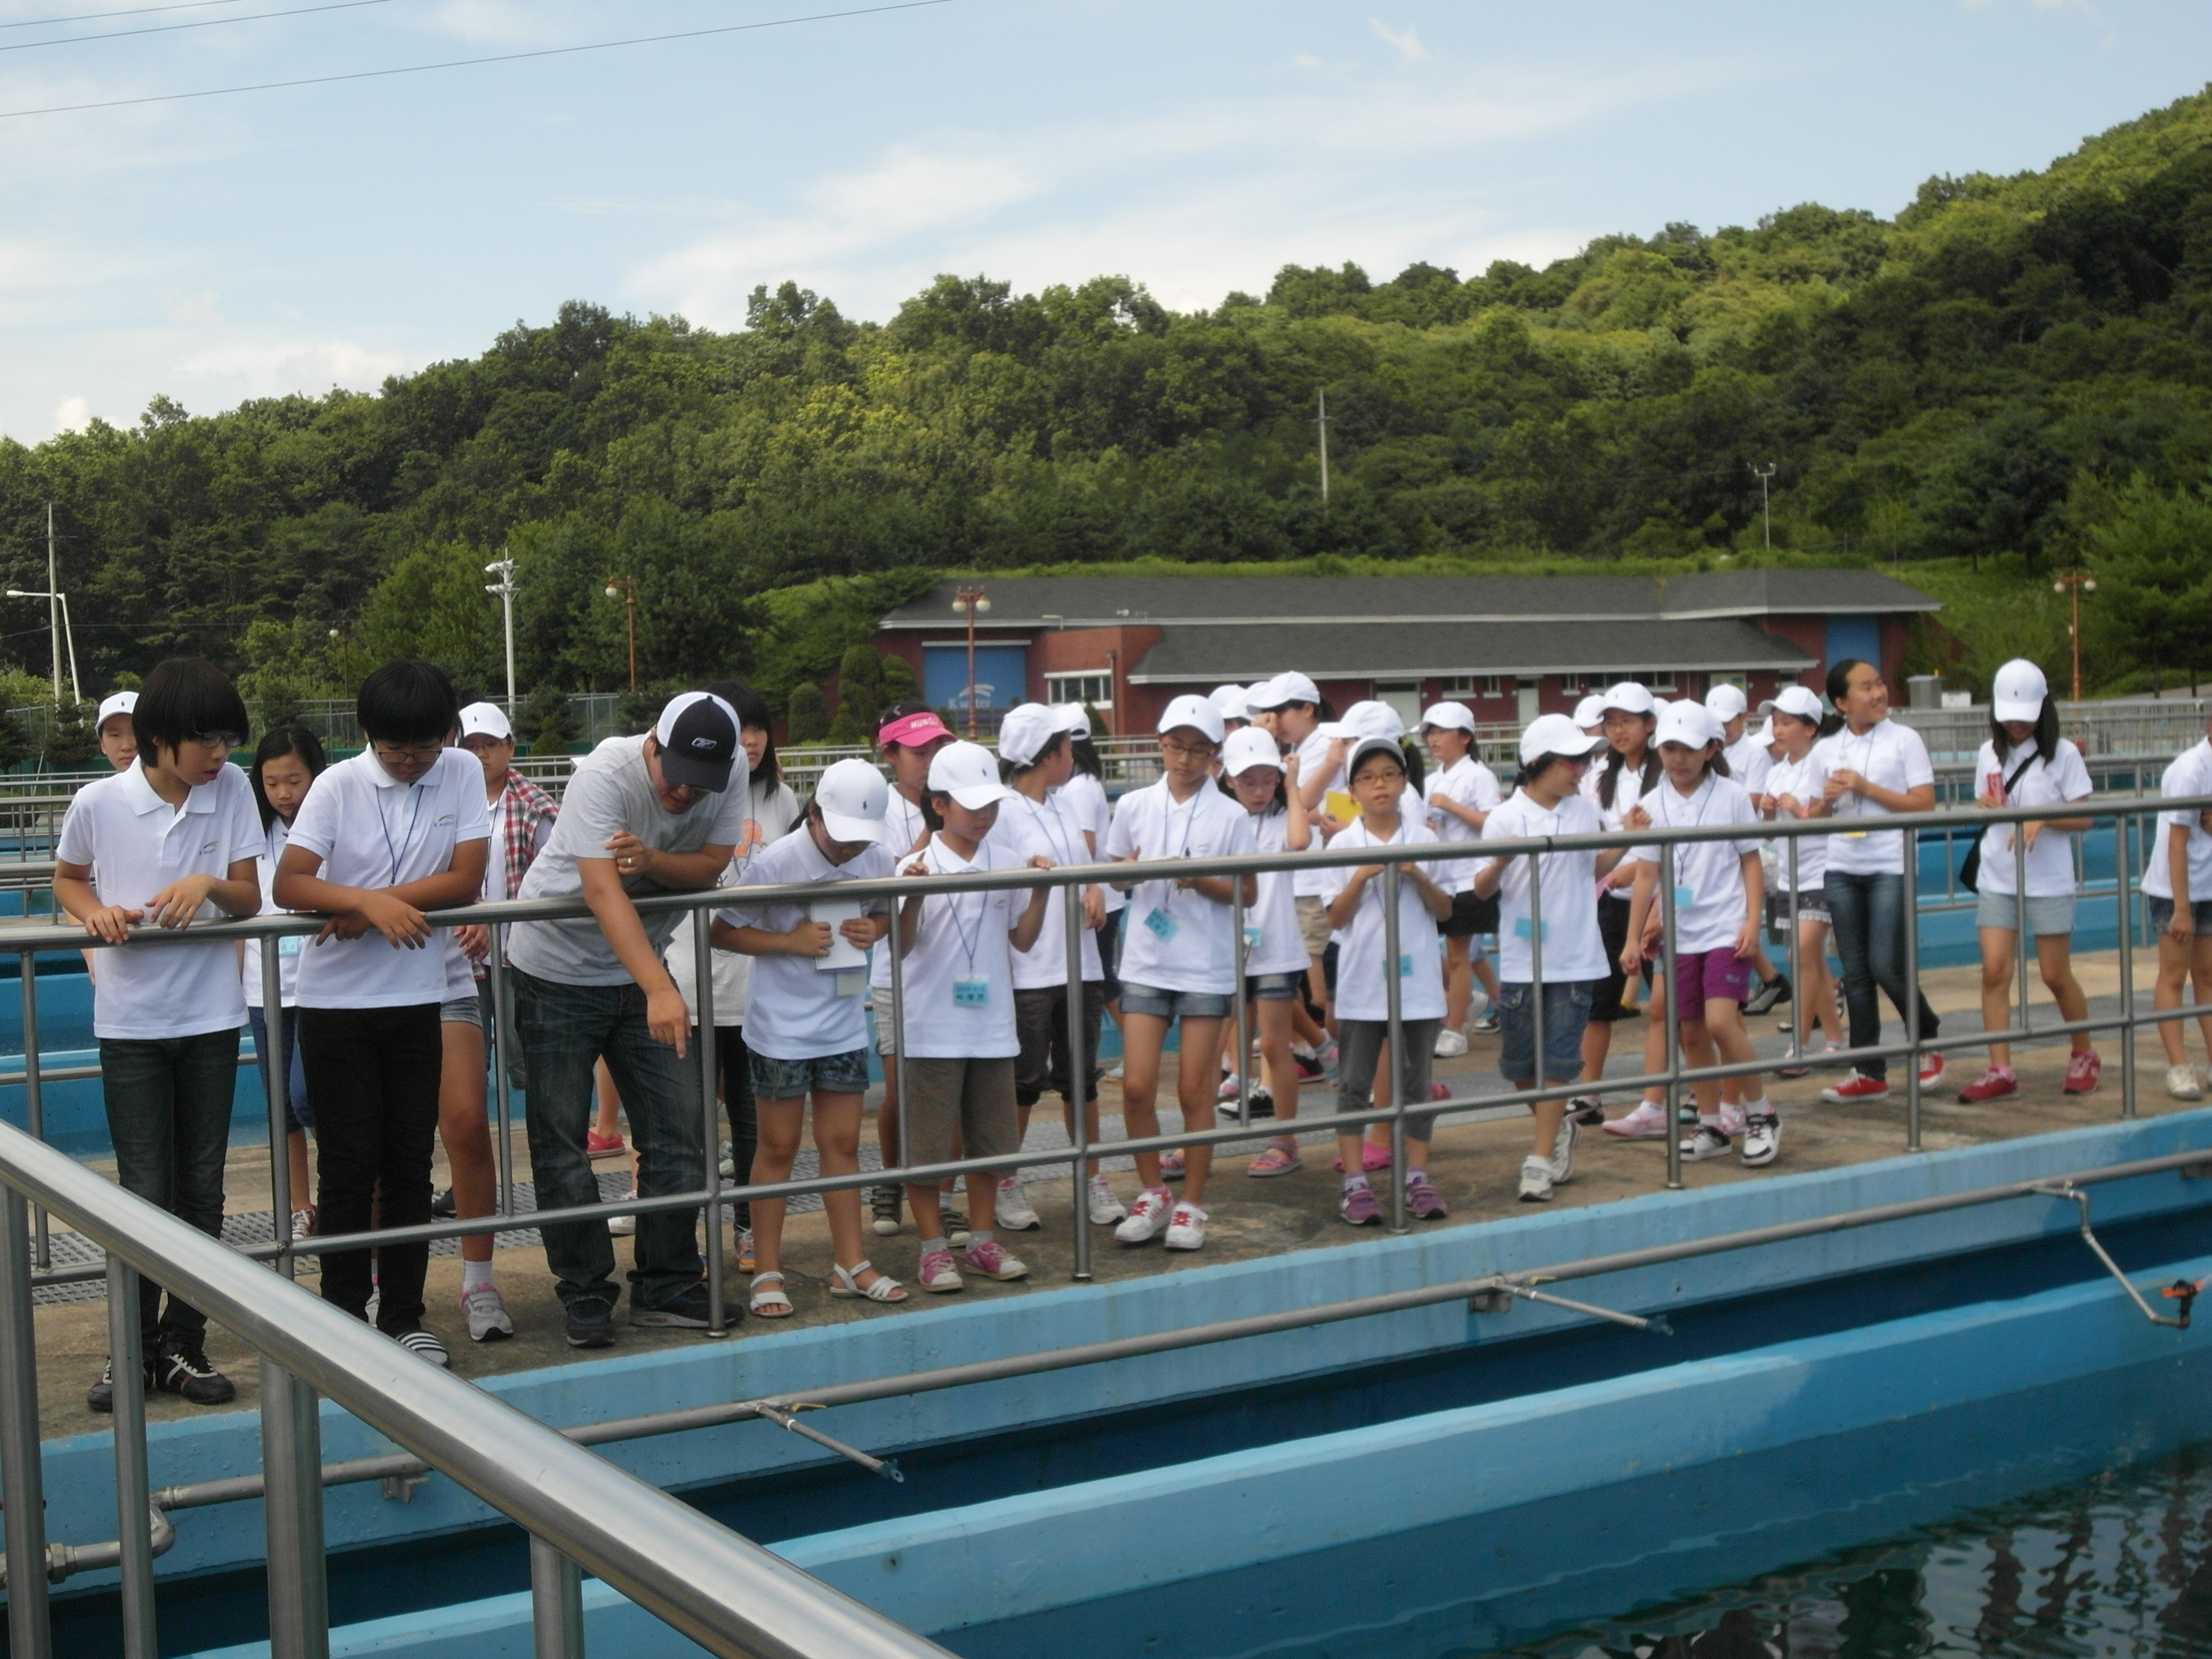 K-water 물 체험 과학교실 인기만점! 지금까지 1만명 참여 이미지[2]